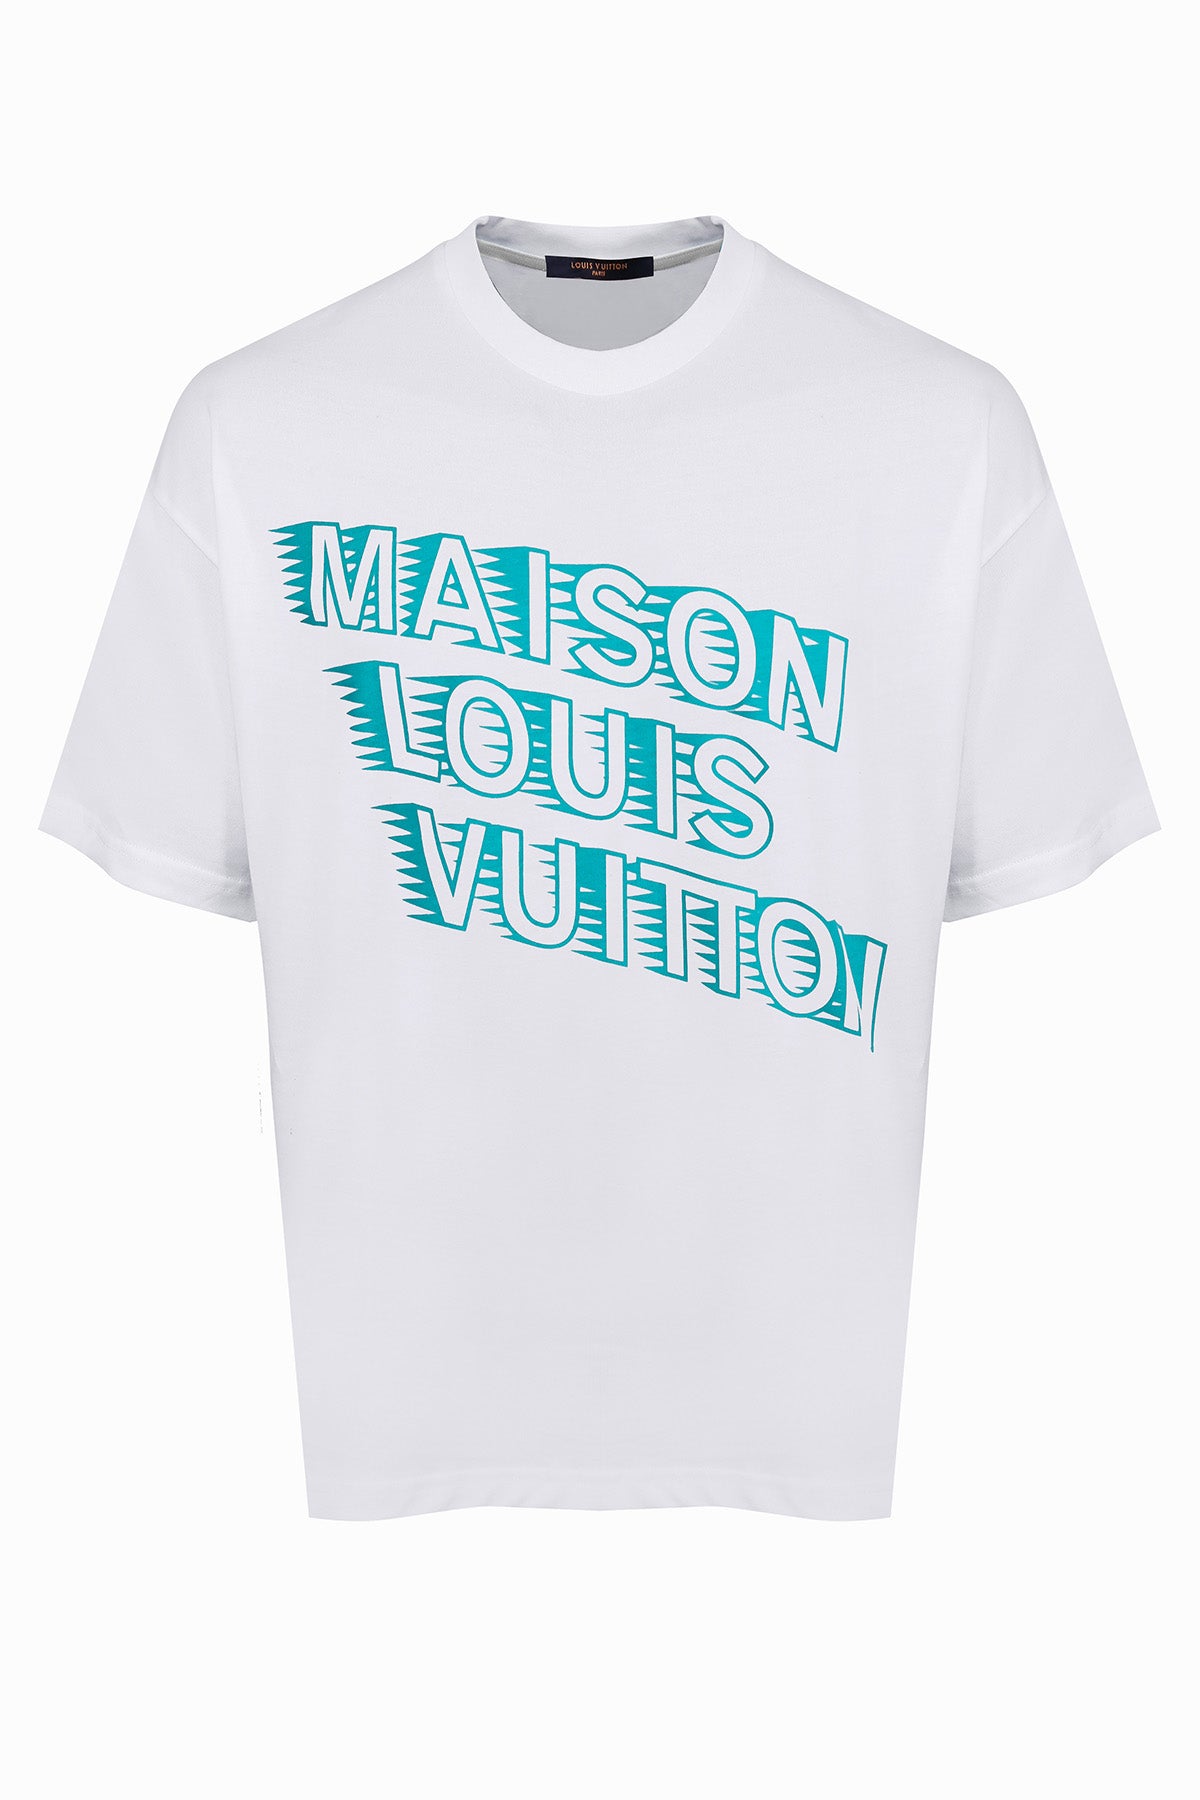 Louis Vuitton Maison LV Crewneck White for Men